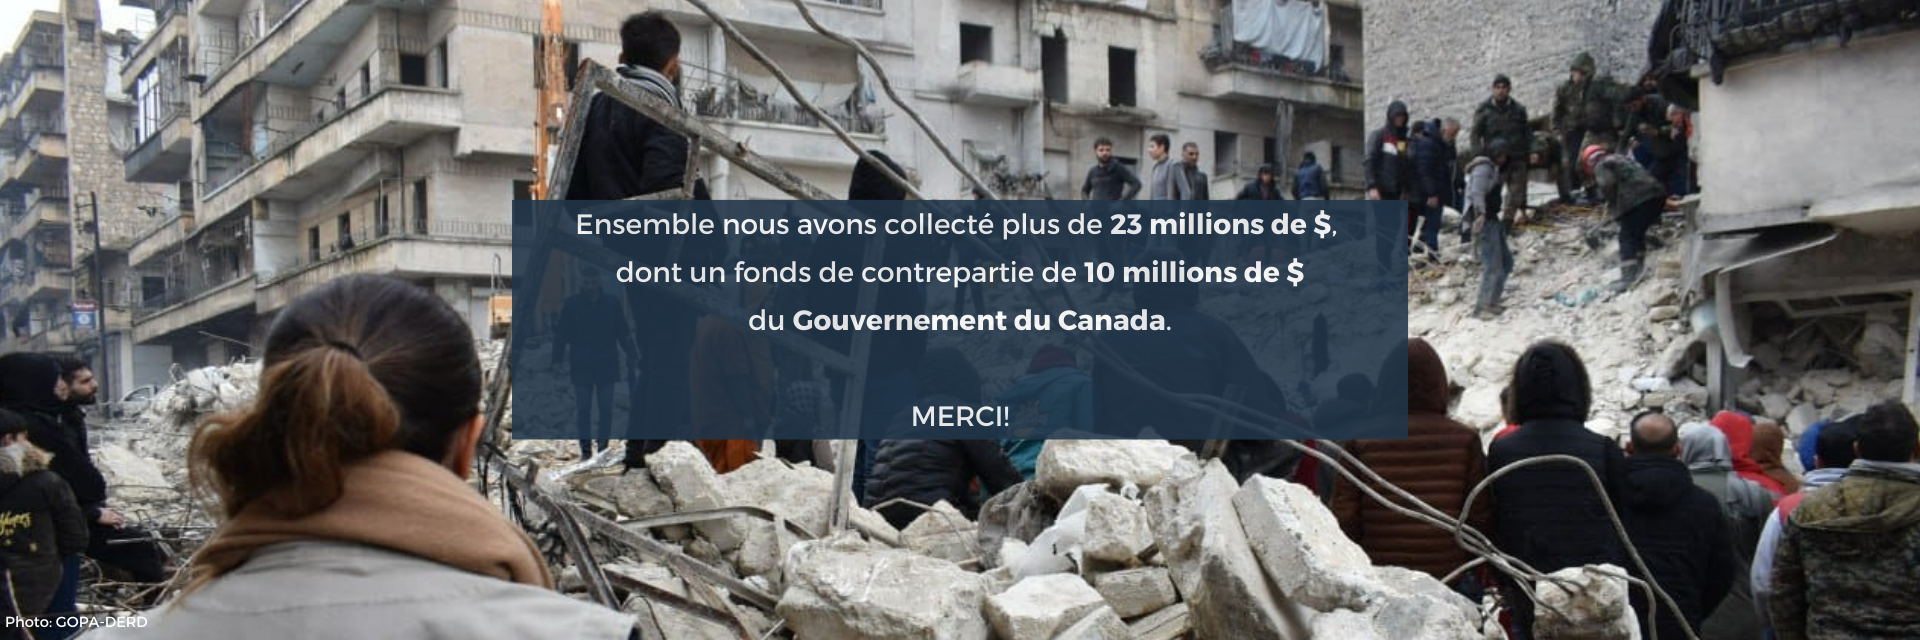 Earthquake in Türkiye and Syria - we raised 23 million dollars